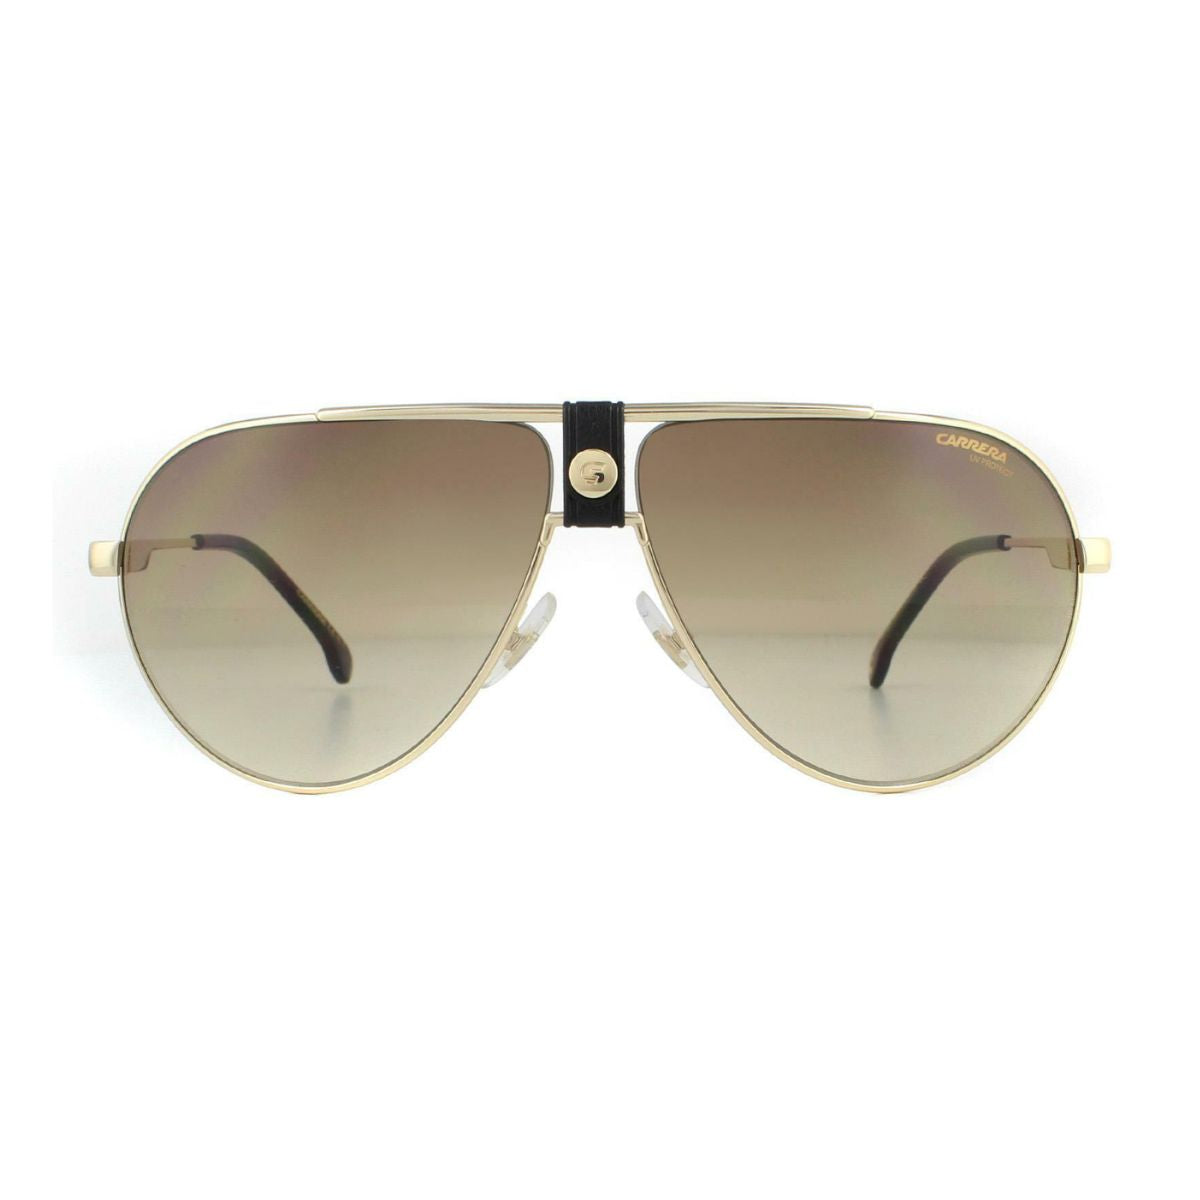 "Carrera Gold Aviator Sunglasses For Mens At Optorium"